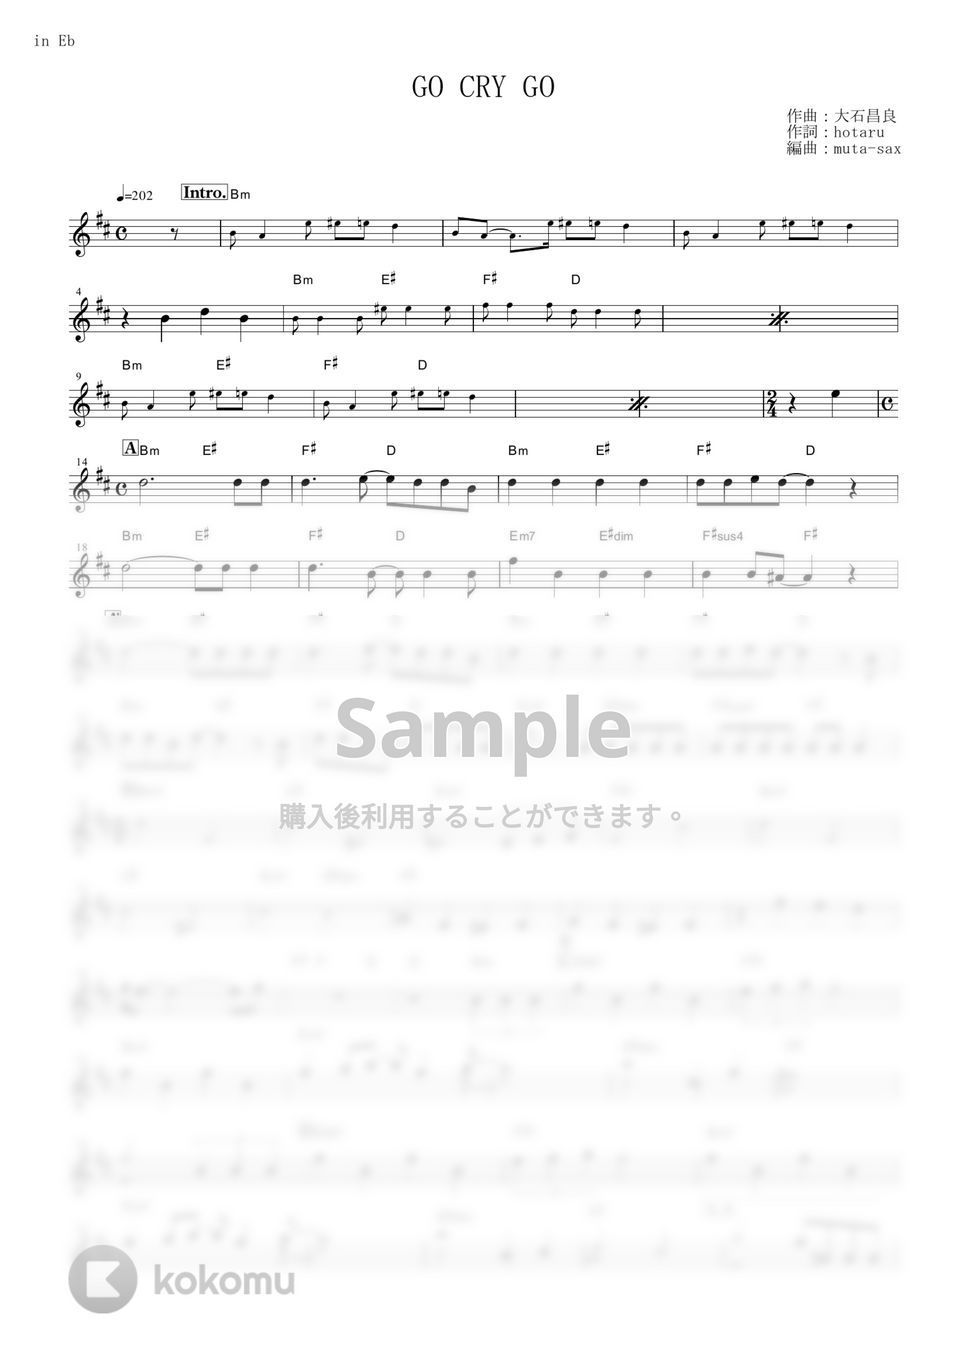 OxT - GO CRY GO (『オーバーロードII』 / in Eb) by muta-sax